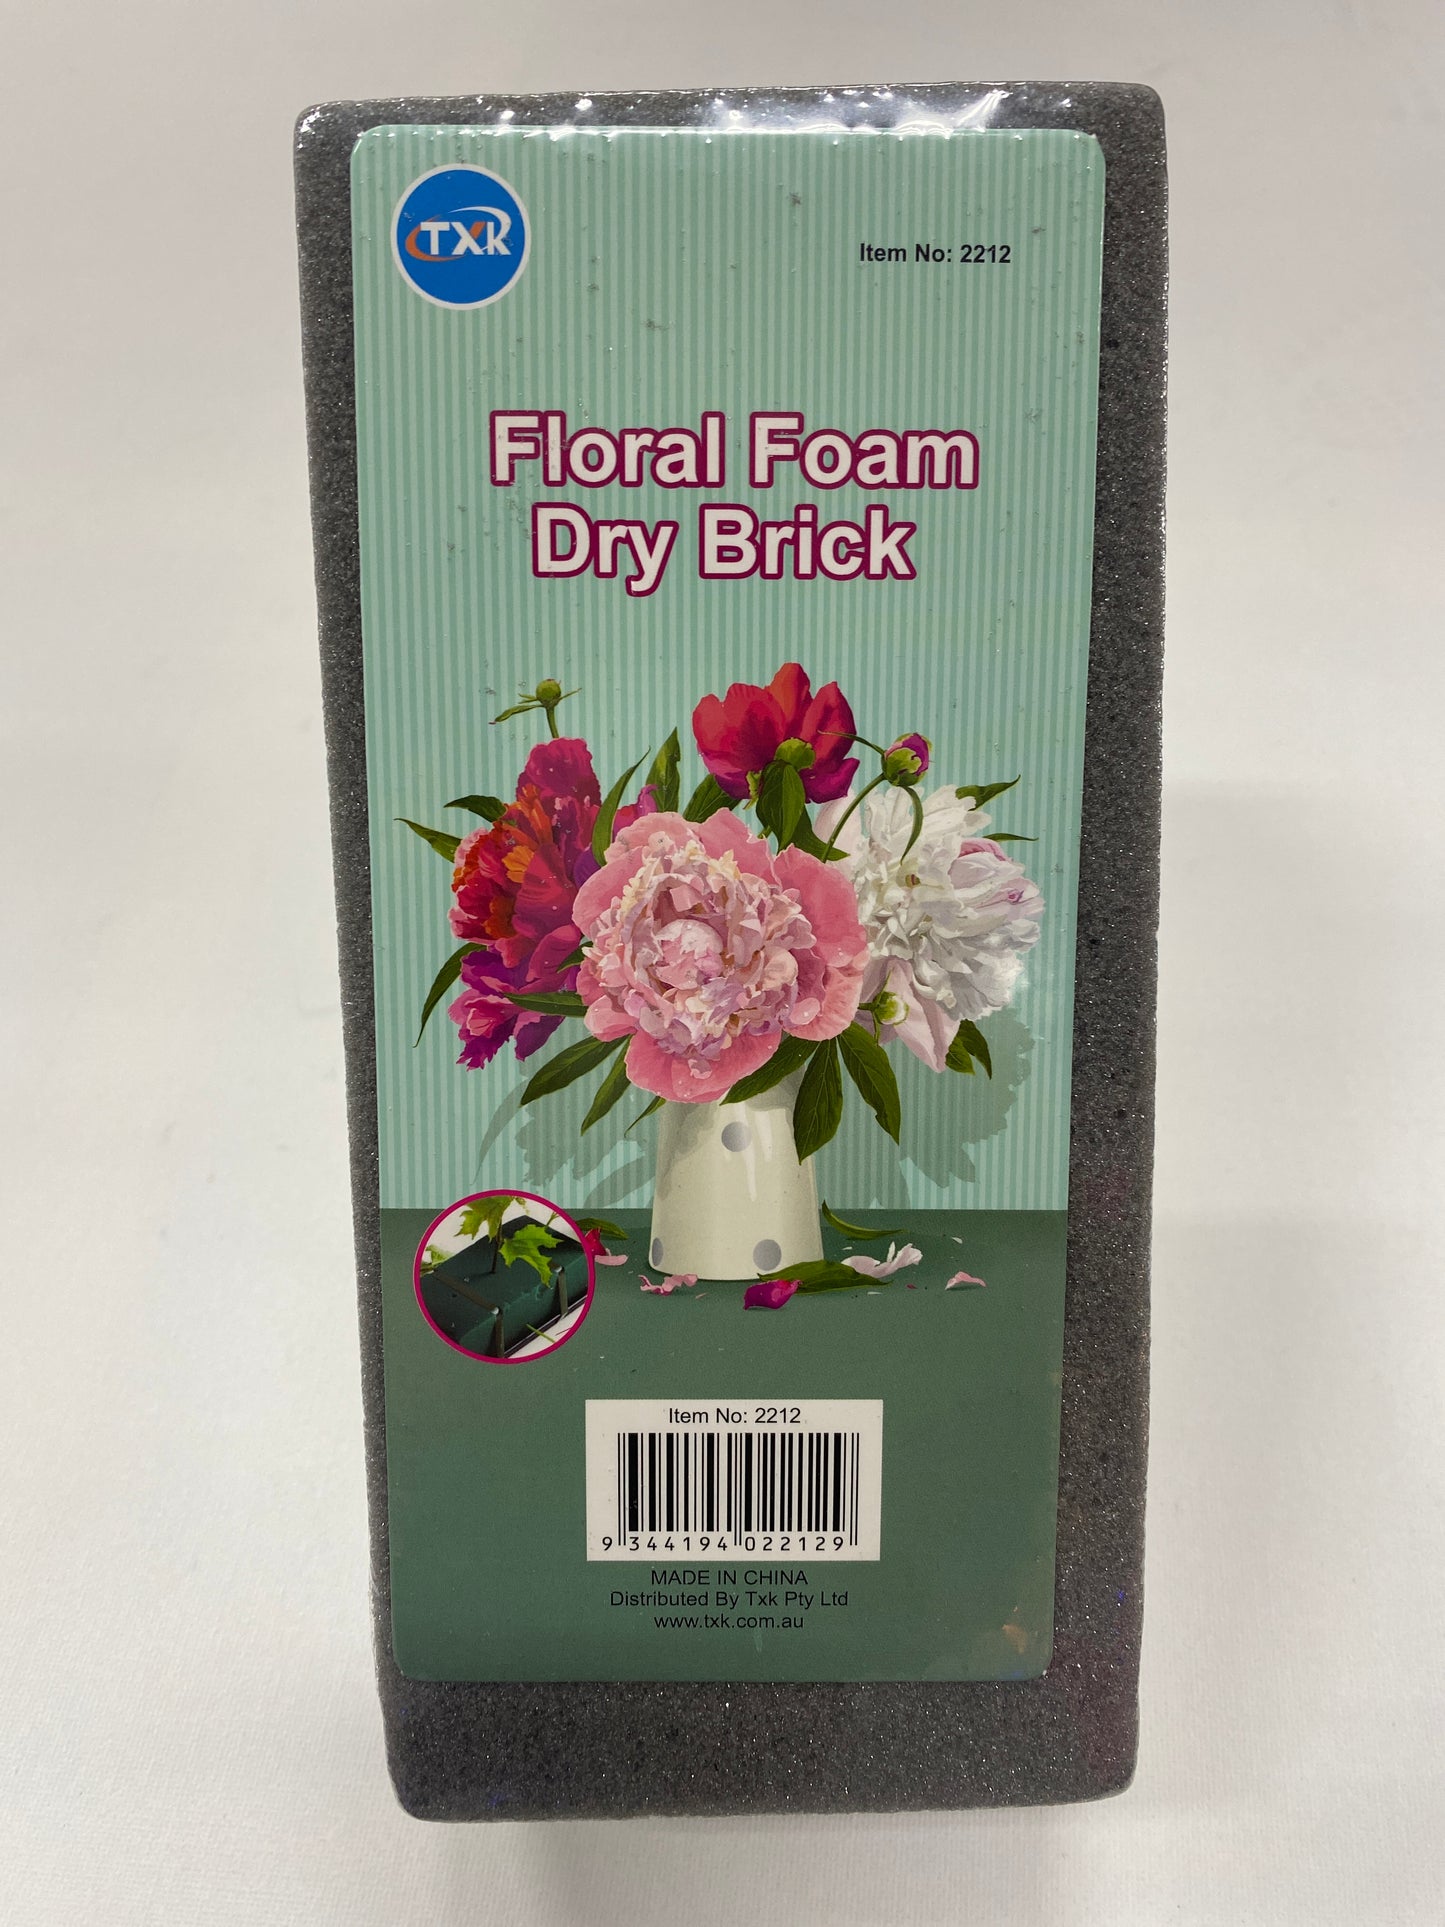 1pce Dry Floral Foam Brick -11x22x7cm. 2212